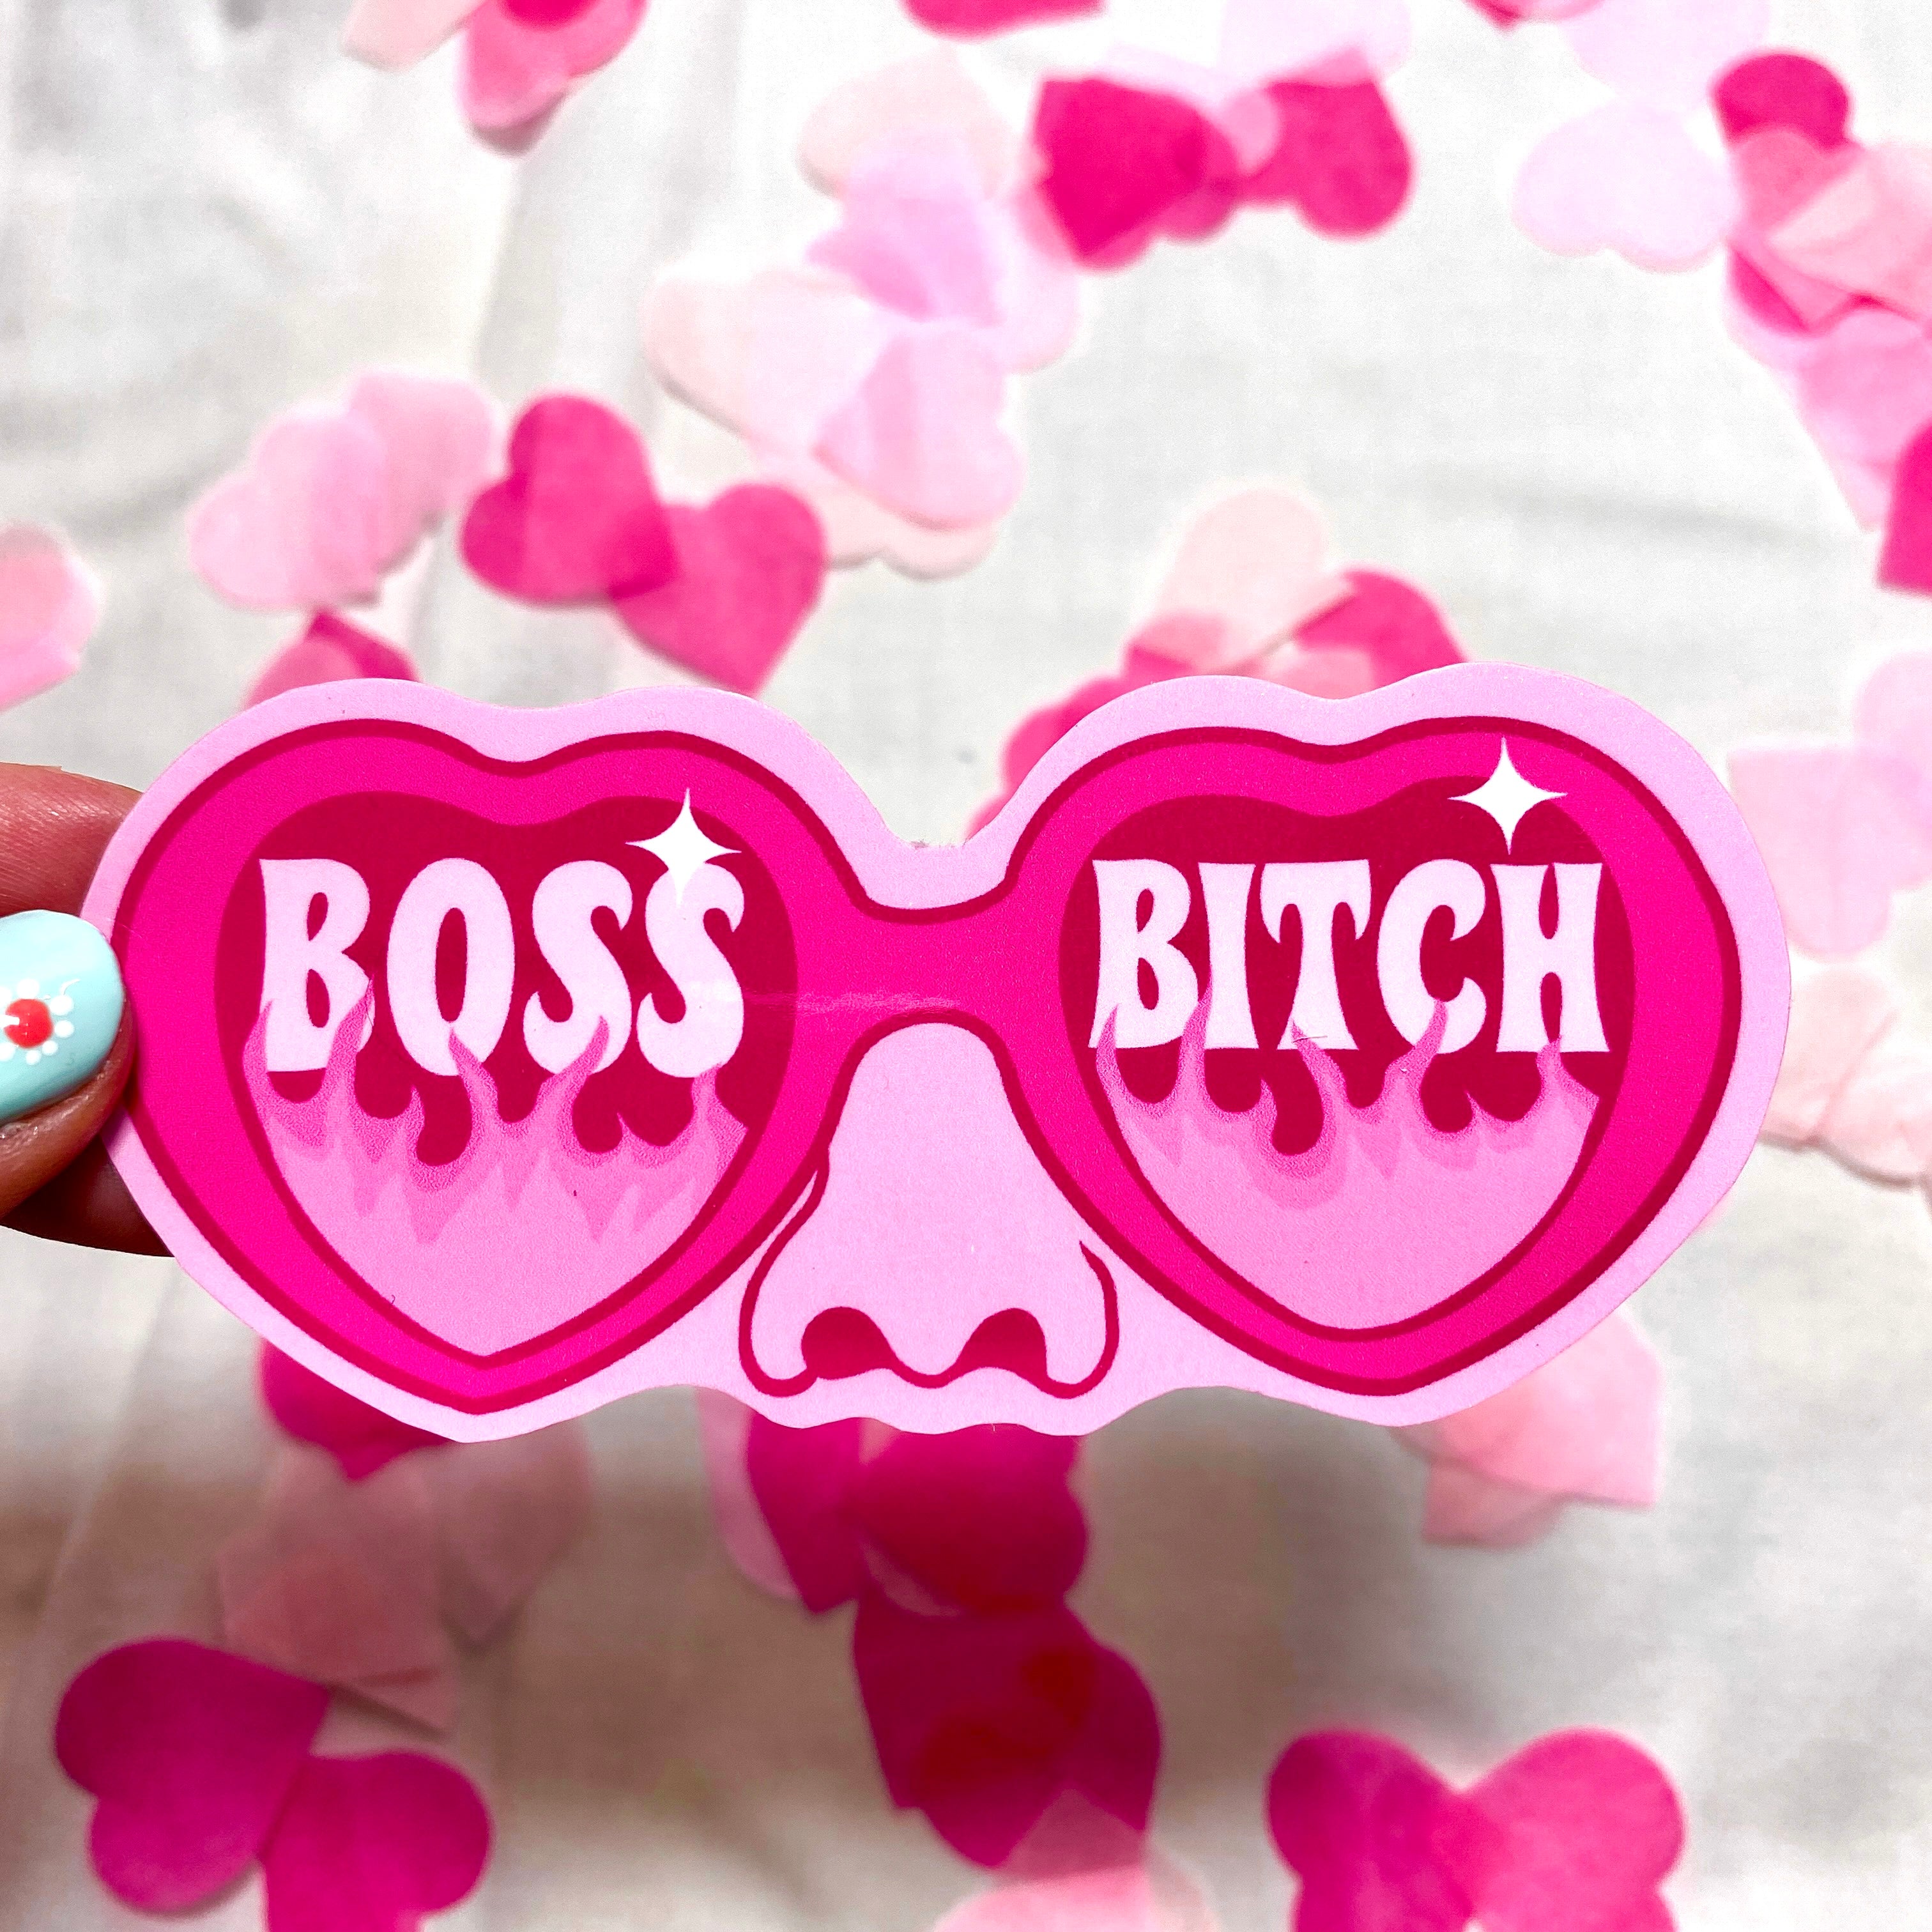 Boss Bitch Sticker